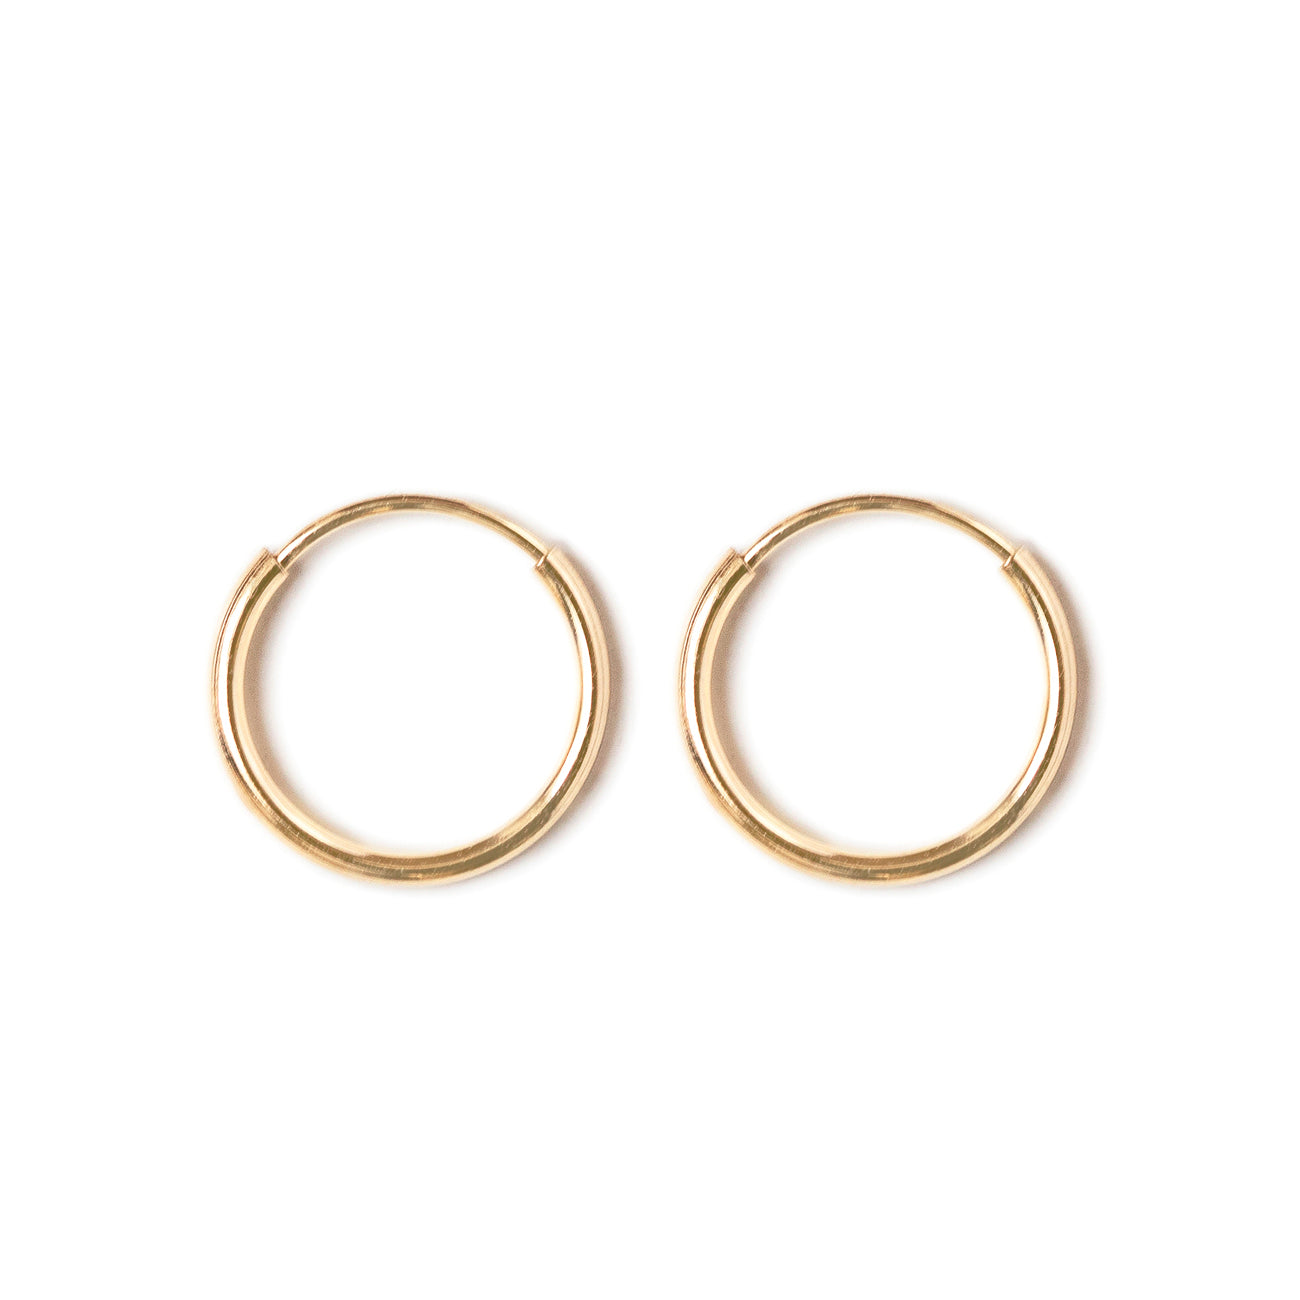 14k gold thin endless huggie earrings